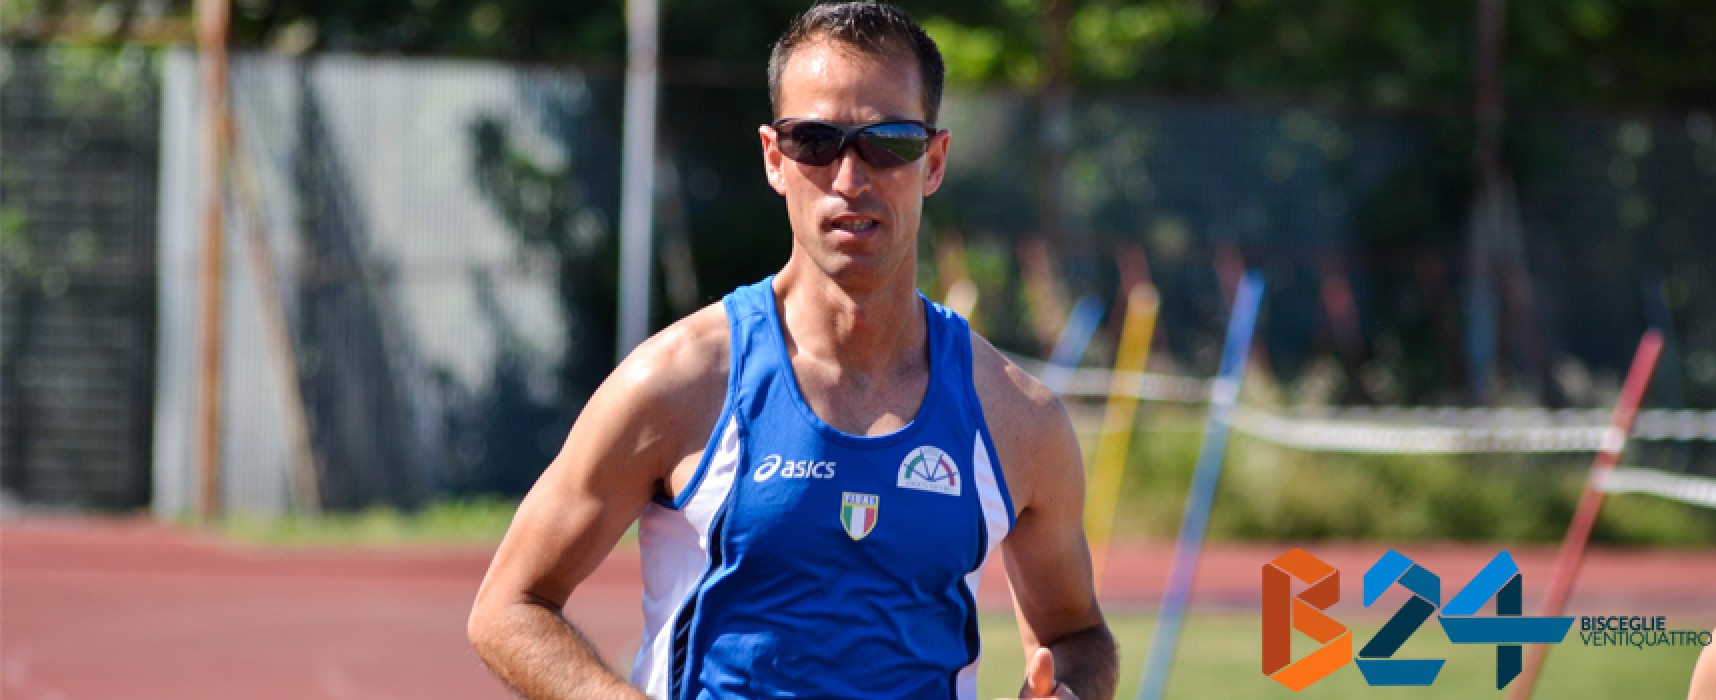 Bebè in arrivo, Gadaleta rinuncia ai Campionati Italiani Master di atletica leggera